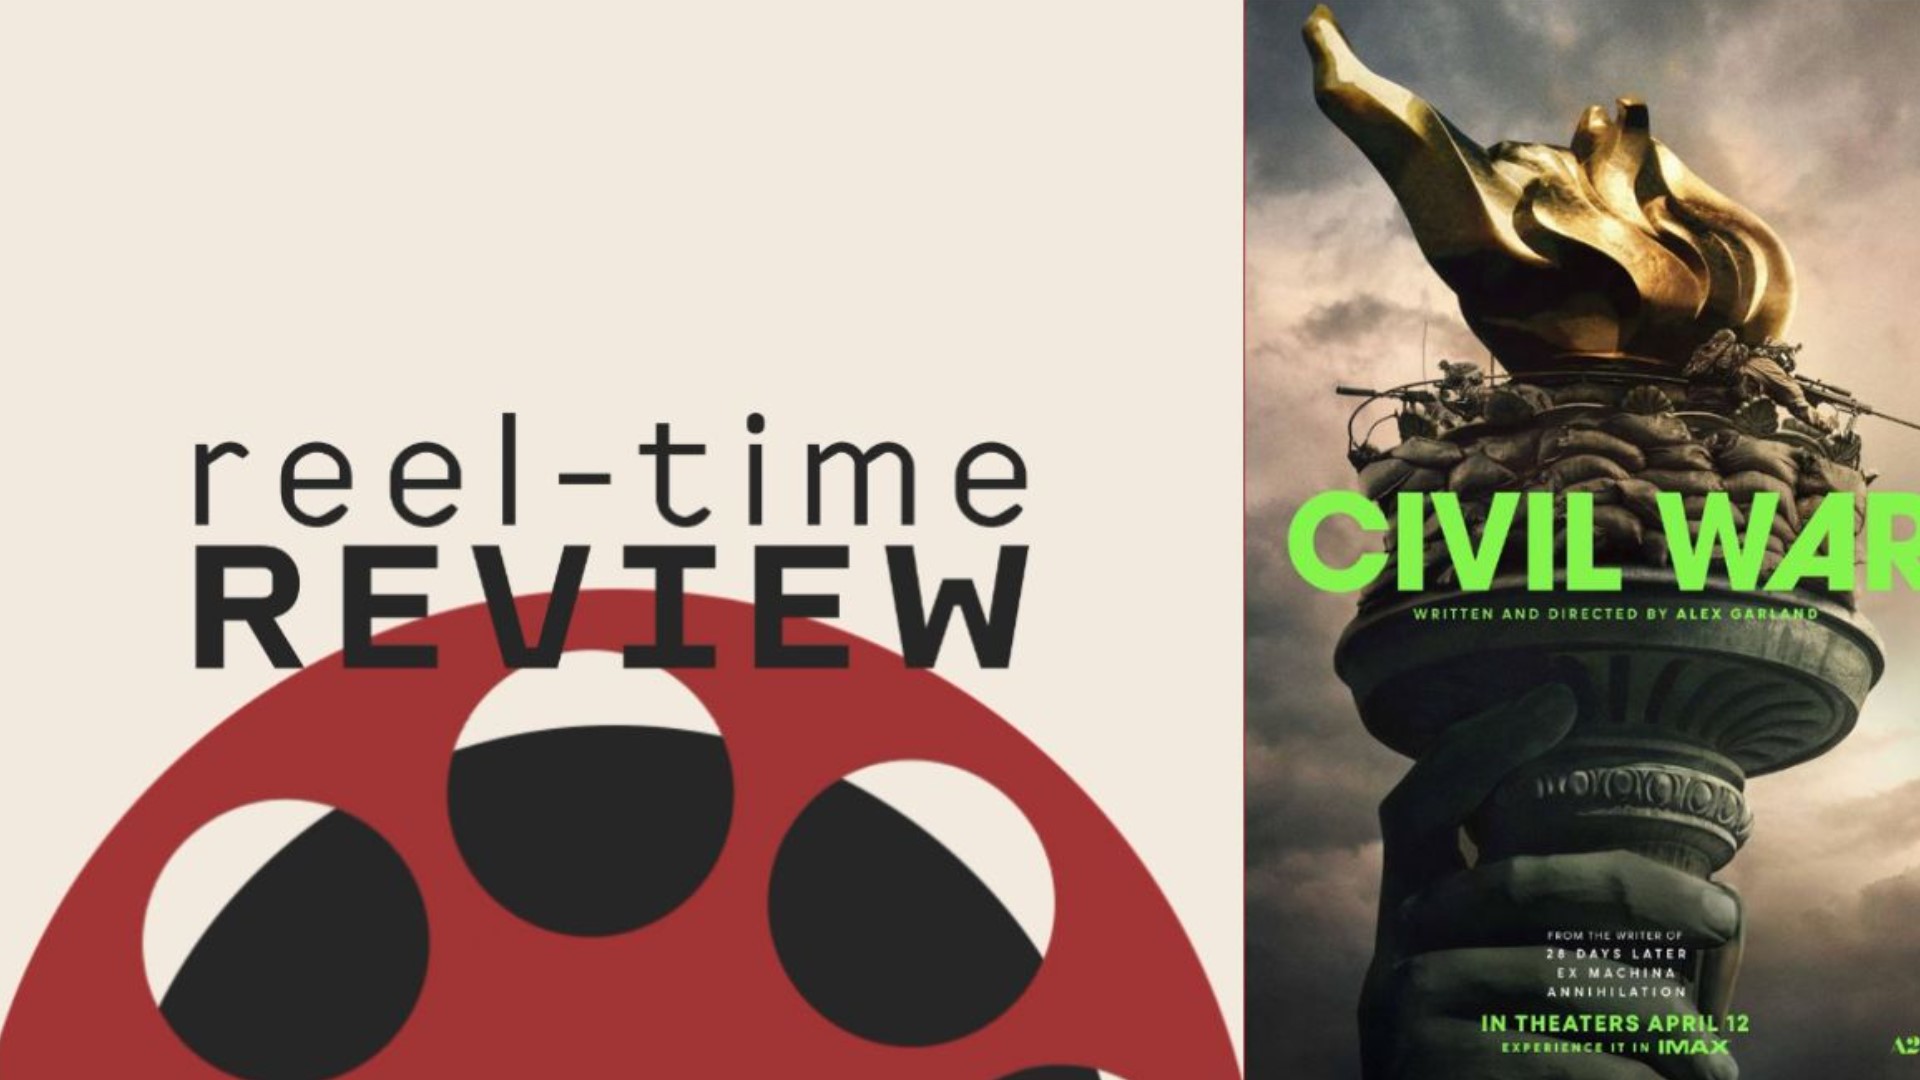 Atlanta film critics Jesse Nussman and Jason Evans discuss Alex Garland's provocative war film "Civil War."